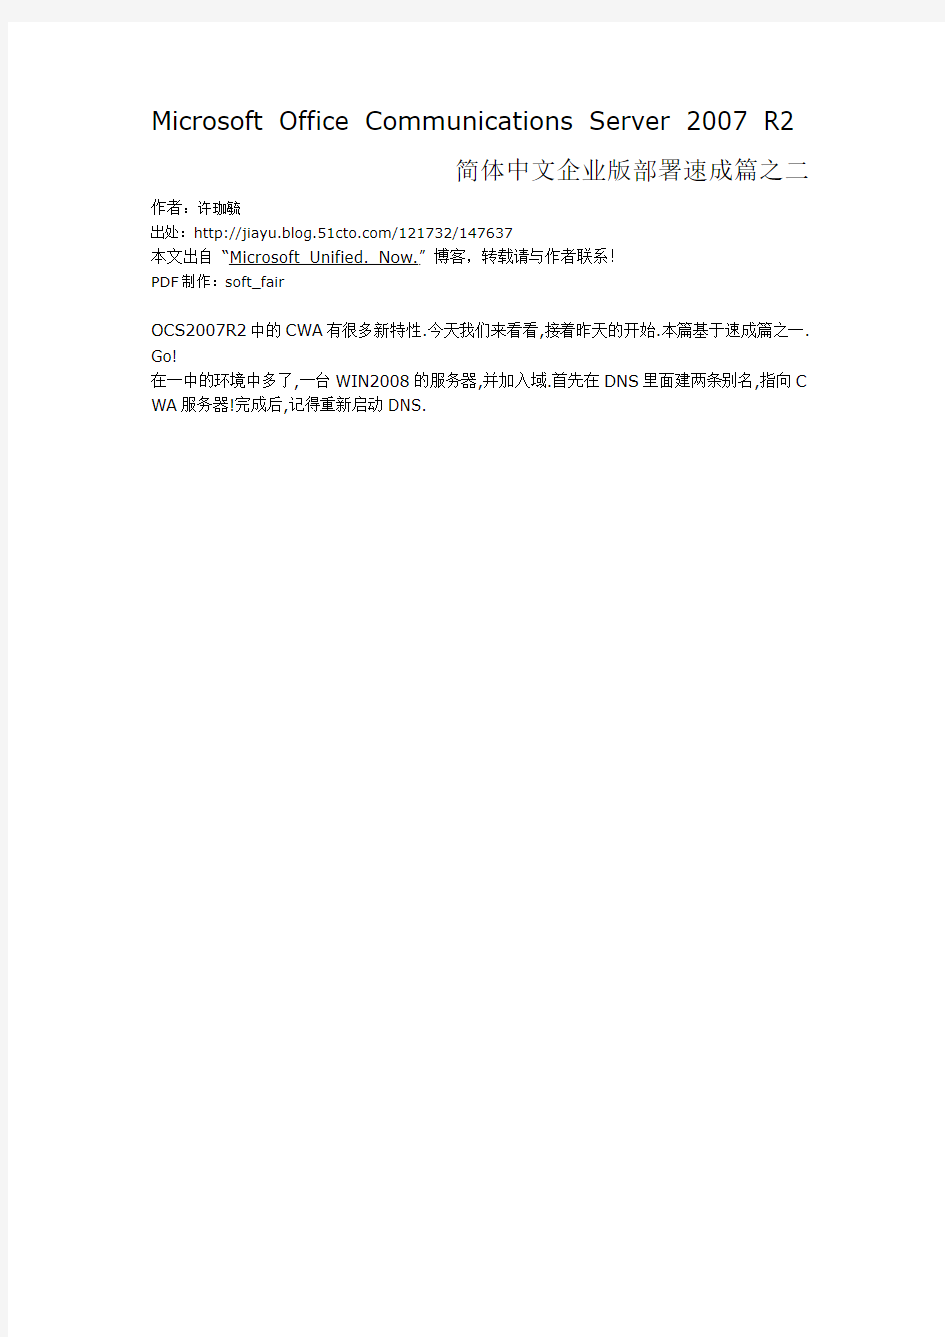 MS-OCS 2007 R2-简体中文企业版部署速成篇之二(CWA部署)